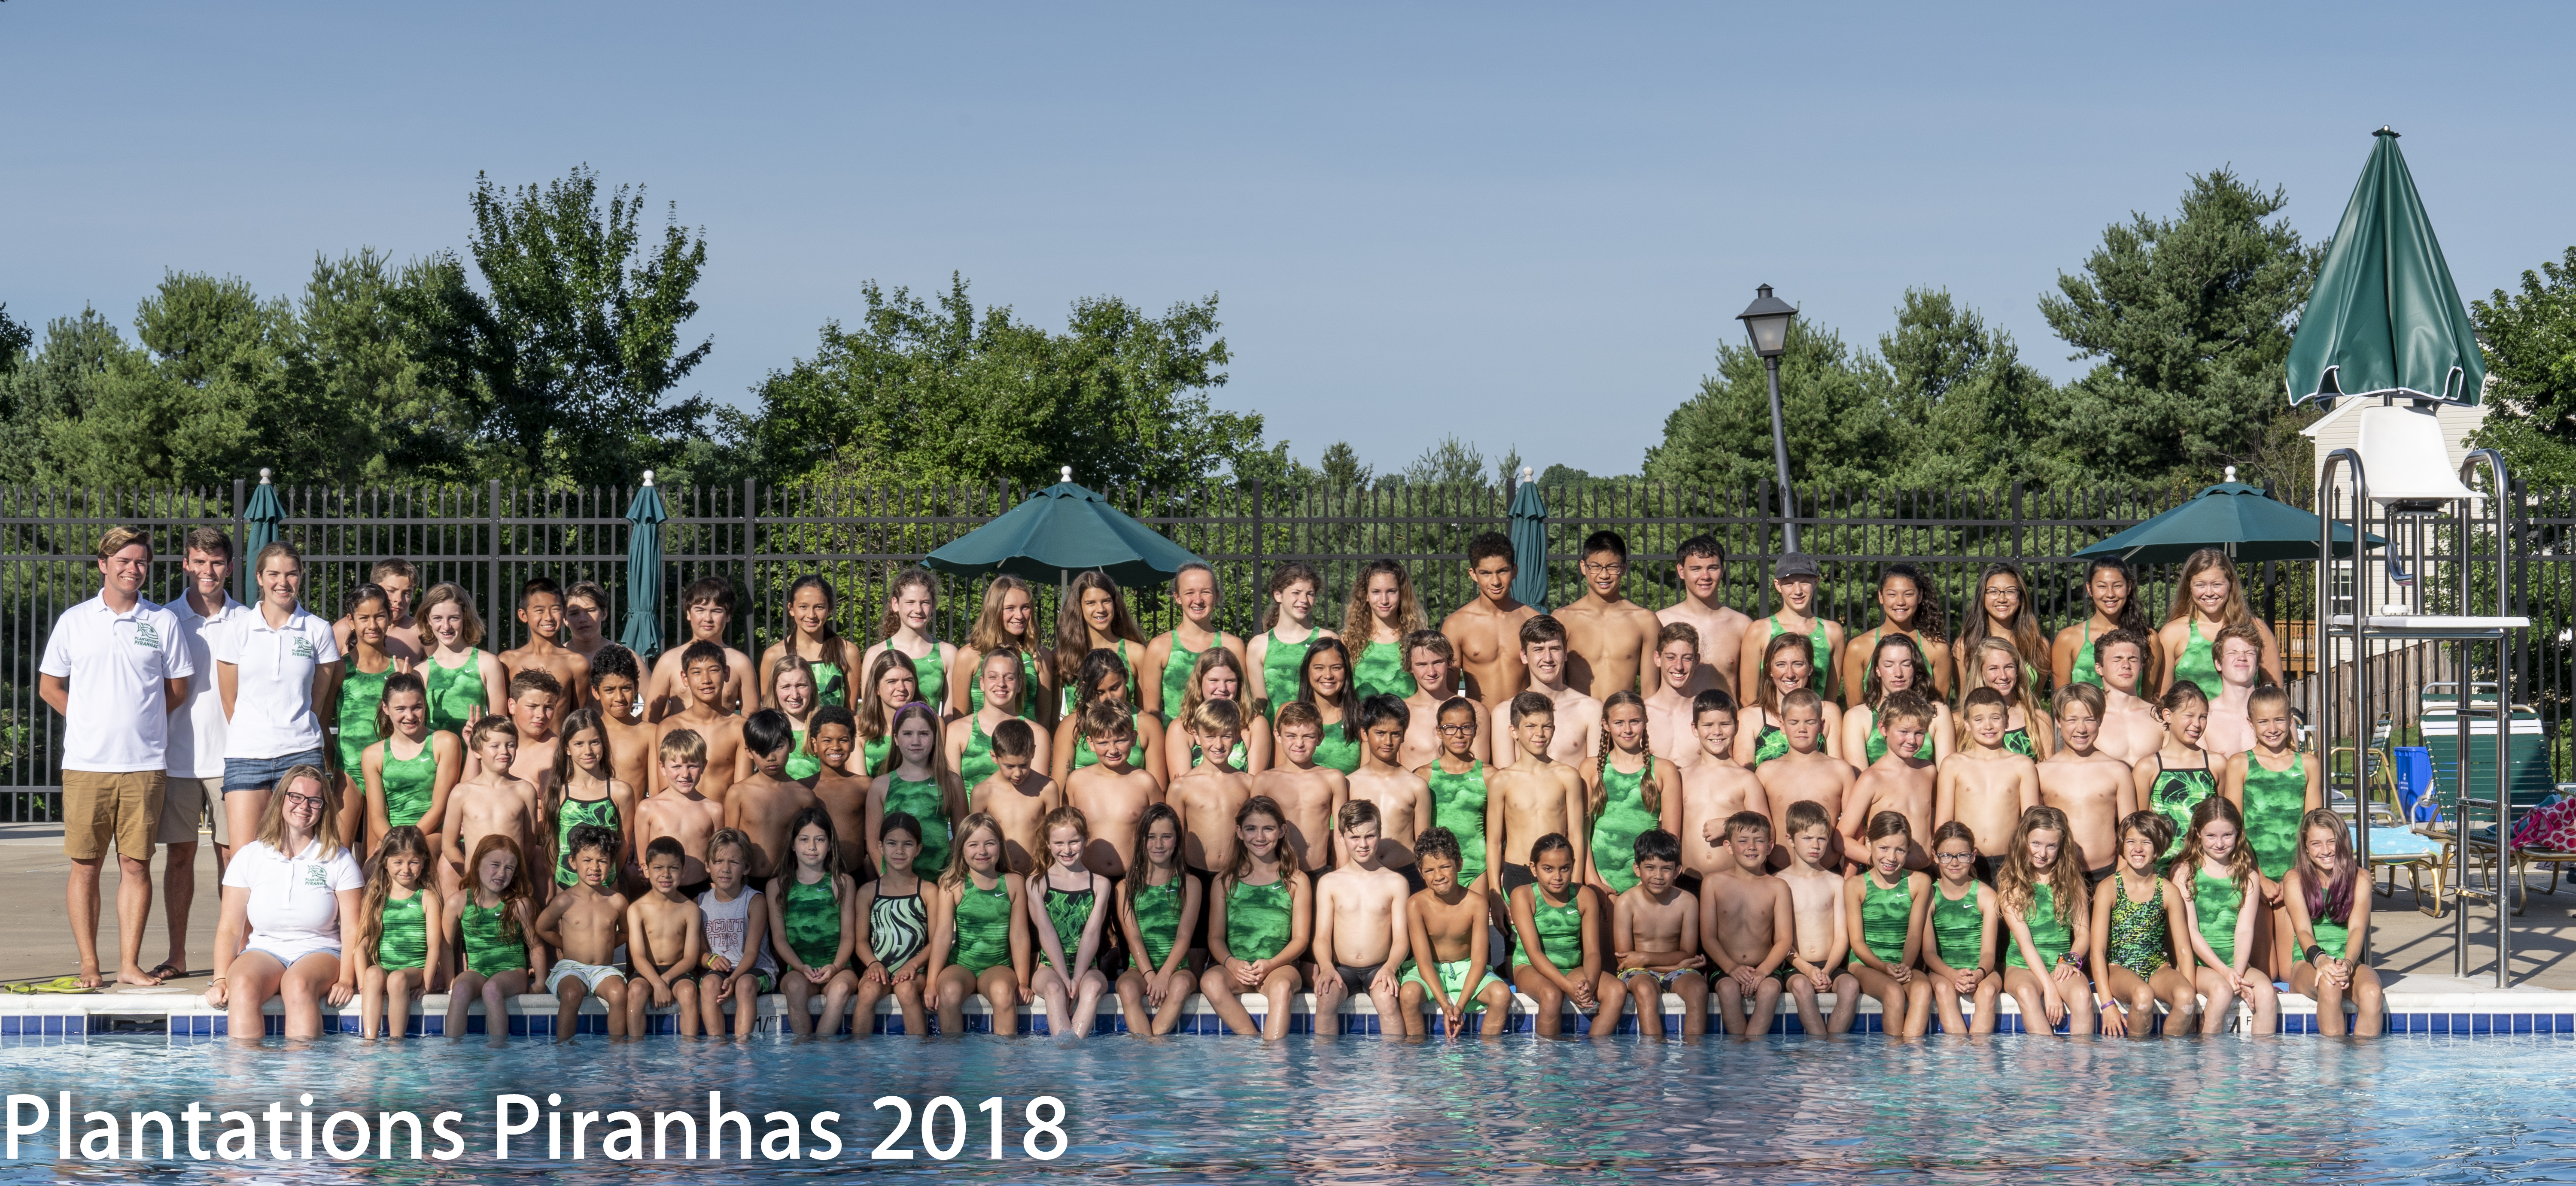 group photo of Piranha Power Plantations Swim Club team in 2018